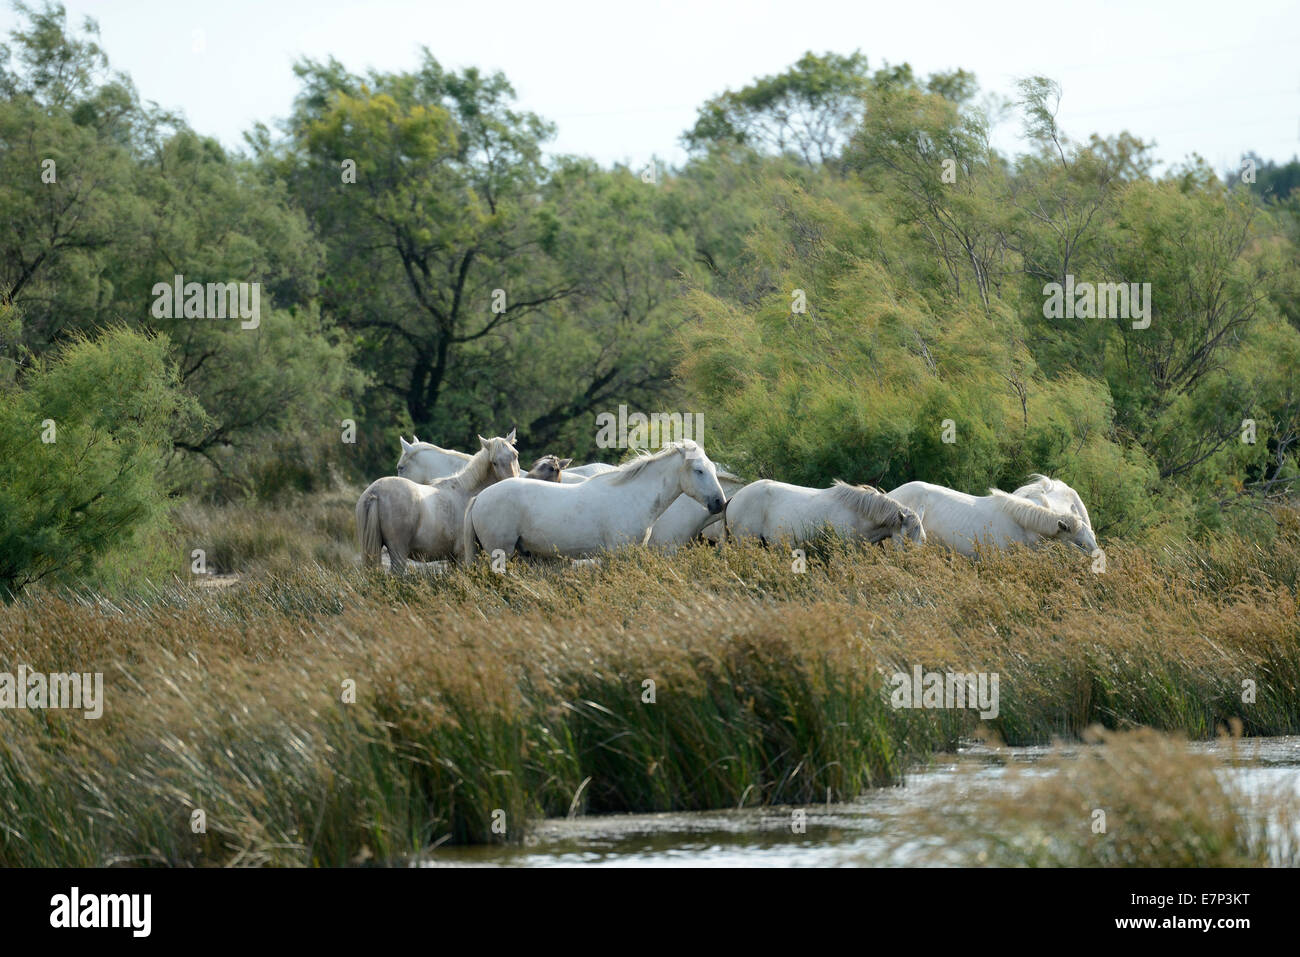 Europe, France, Languedoc- Roussillon, Camargue, wetland, nature, wild horses, herd Stock Photo